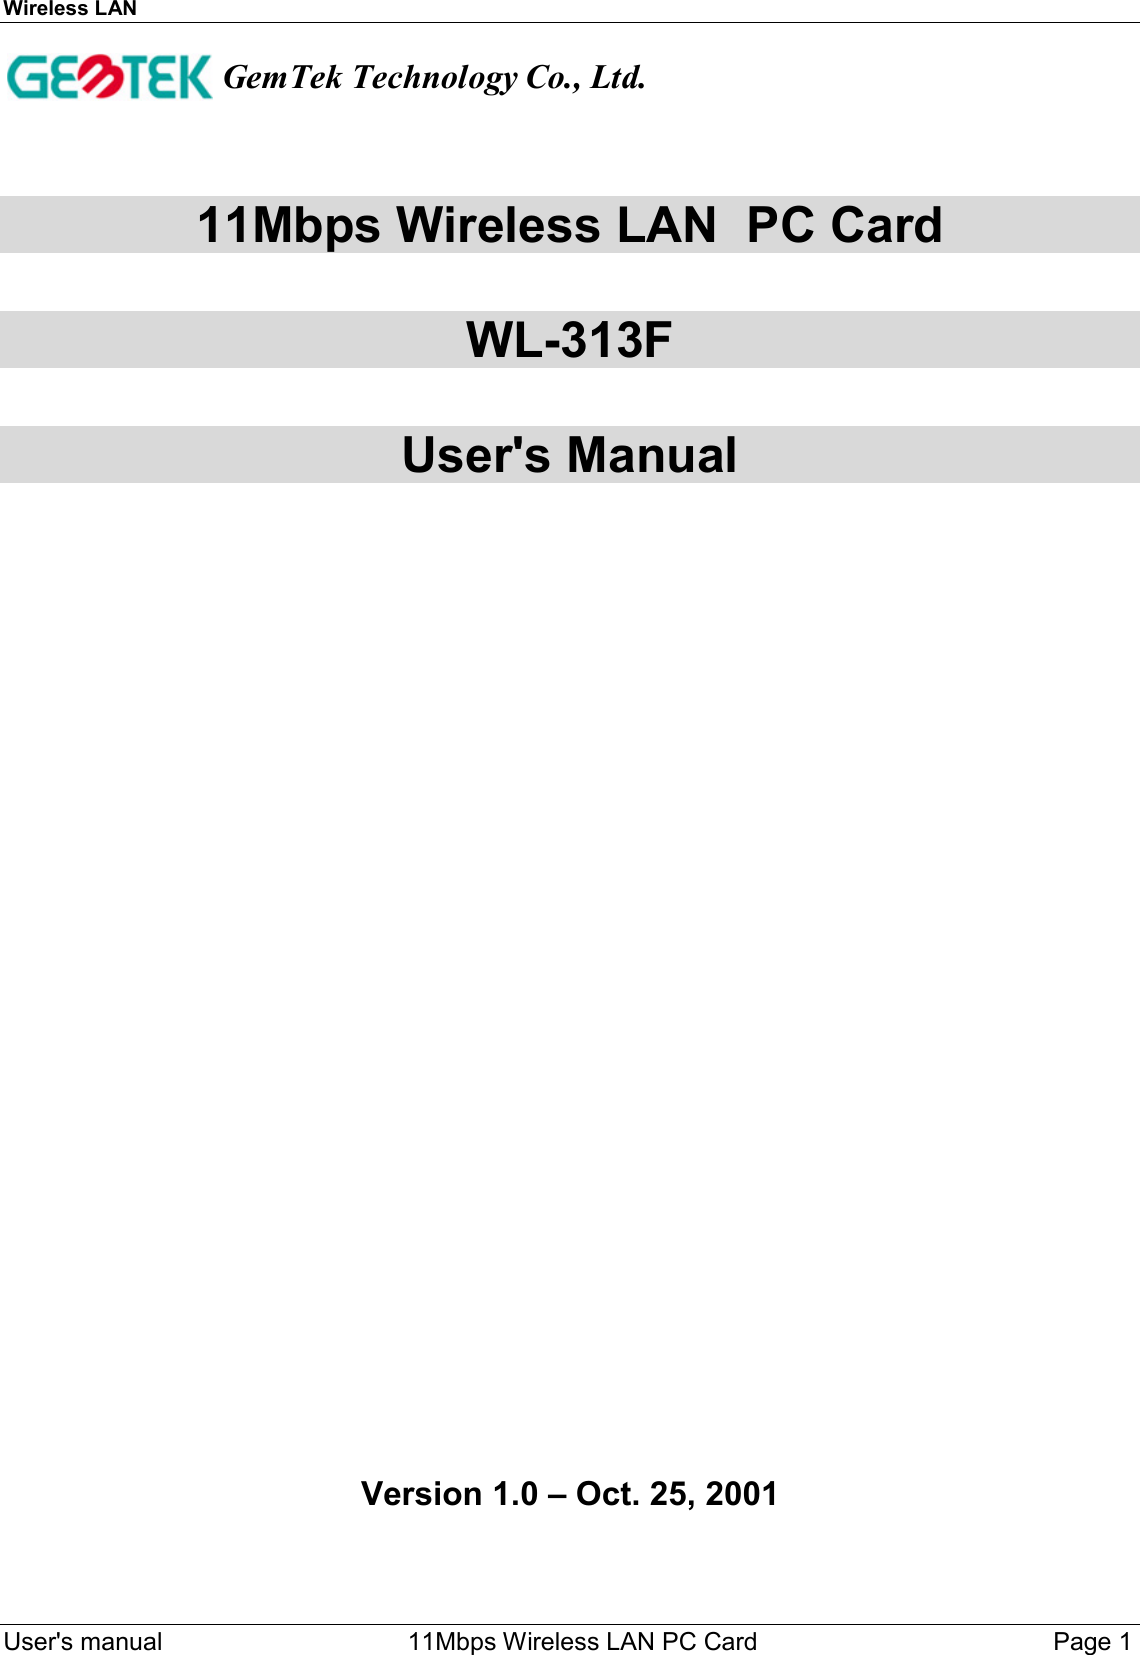 Wireless LAN  User&apos;s manual    11Mbps Wireless LAN PC Card Page 111Mbps Wireless LAN  PC CardWL-313FUser&apos;s Manual   Version 1.0 – Oct. 25, 2001GemTek Technology Co., Ltd.